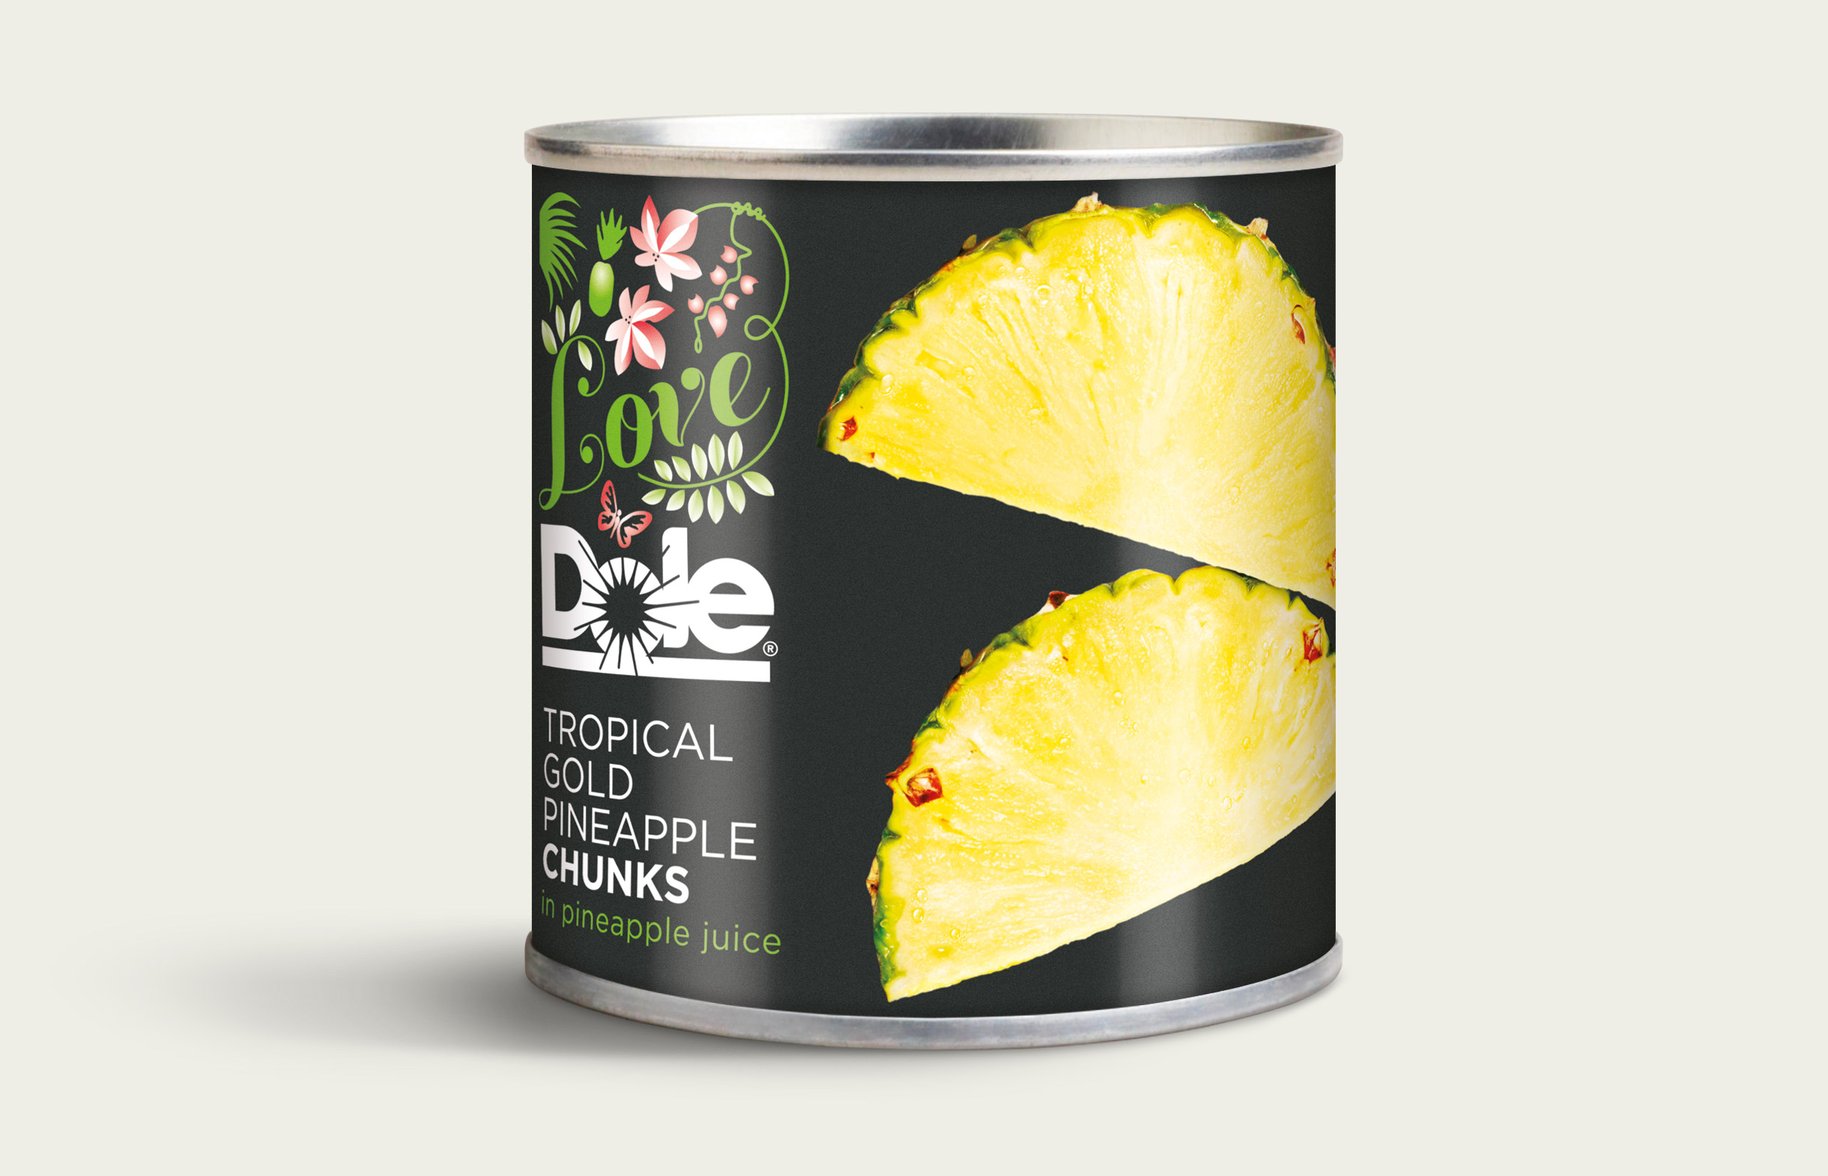 Dole Tinned Pineapple chunks Packaging Design 